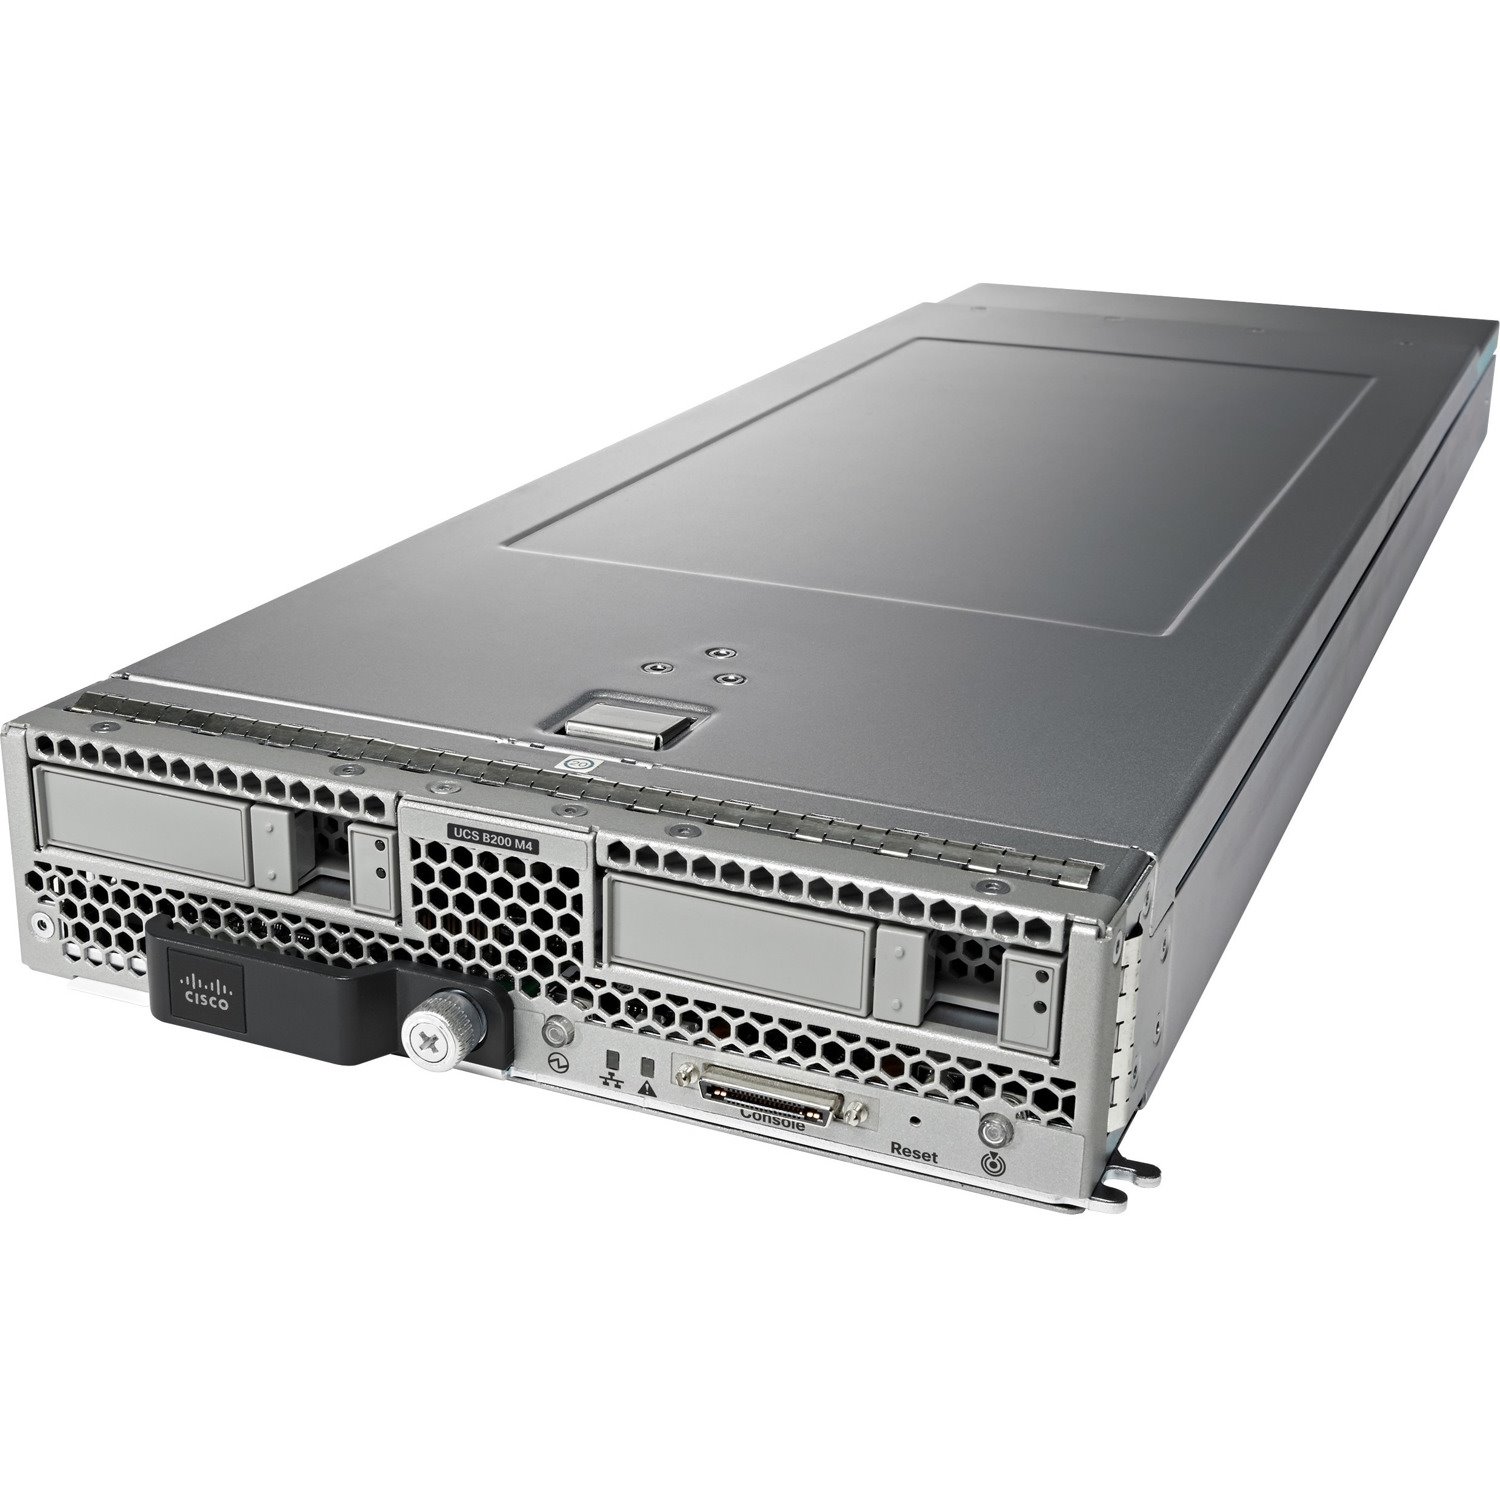 Cisco B200 M4 Blade Server - 2 x Intel Xeon E5-2697 v4 2.30 GHz - 256 GB RAM - Serial ATA/600, 12Gb/s SAS Controller - Refurbished